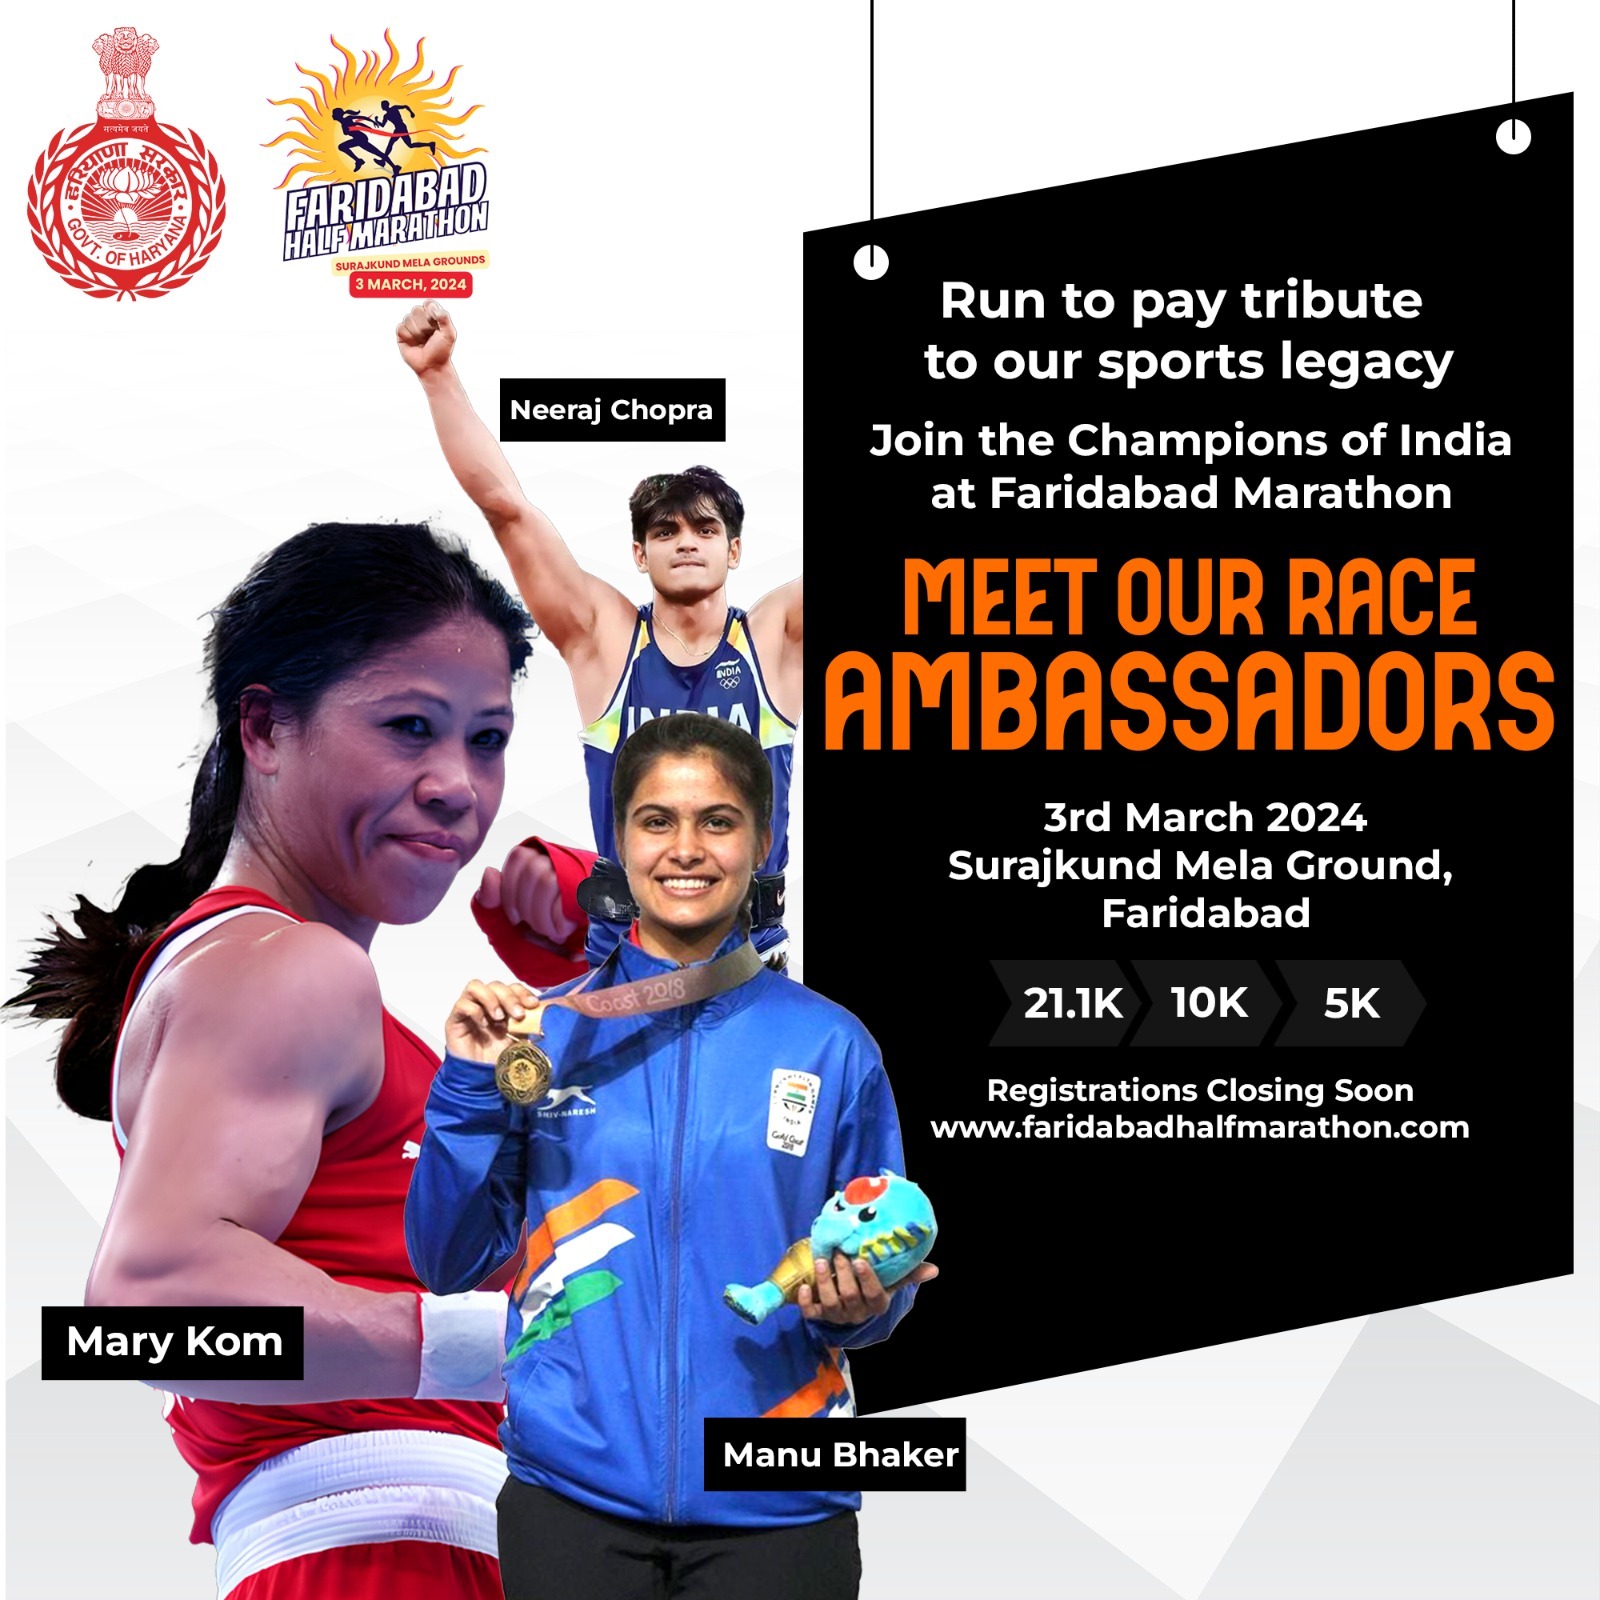 Olympians Mary Kom and Manu Bhaker, will take part in the Faridabad Half Marathon